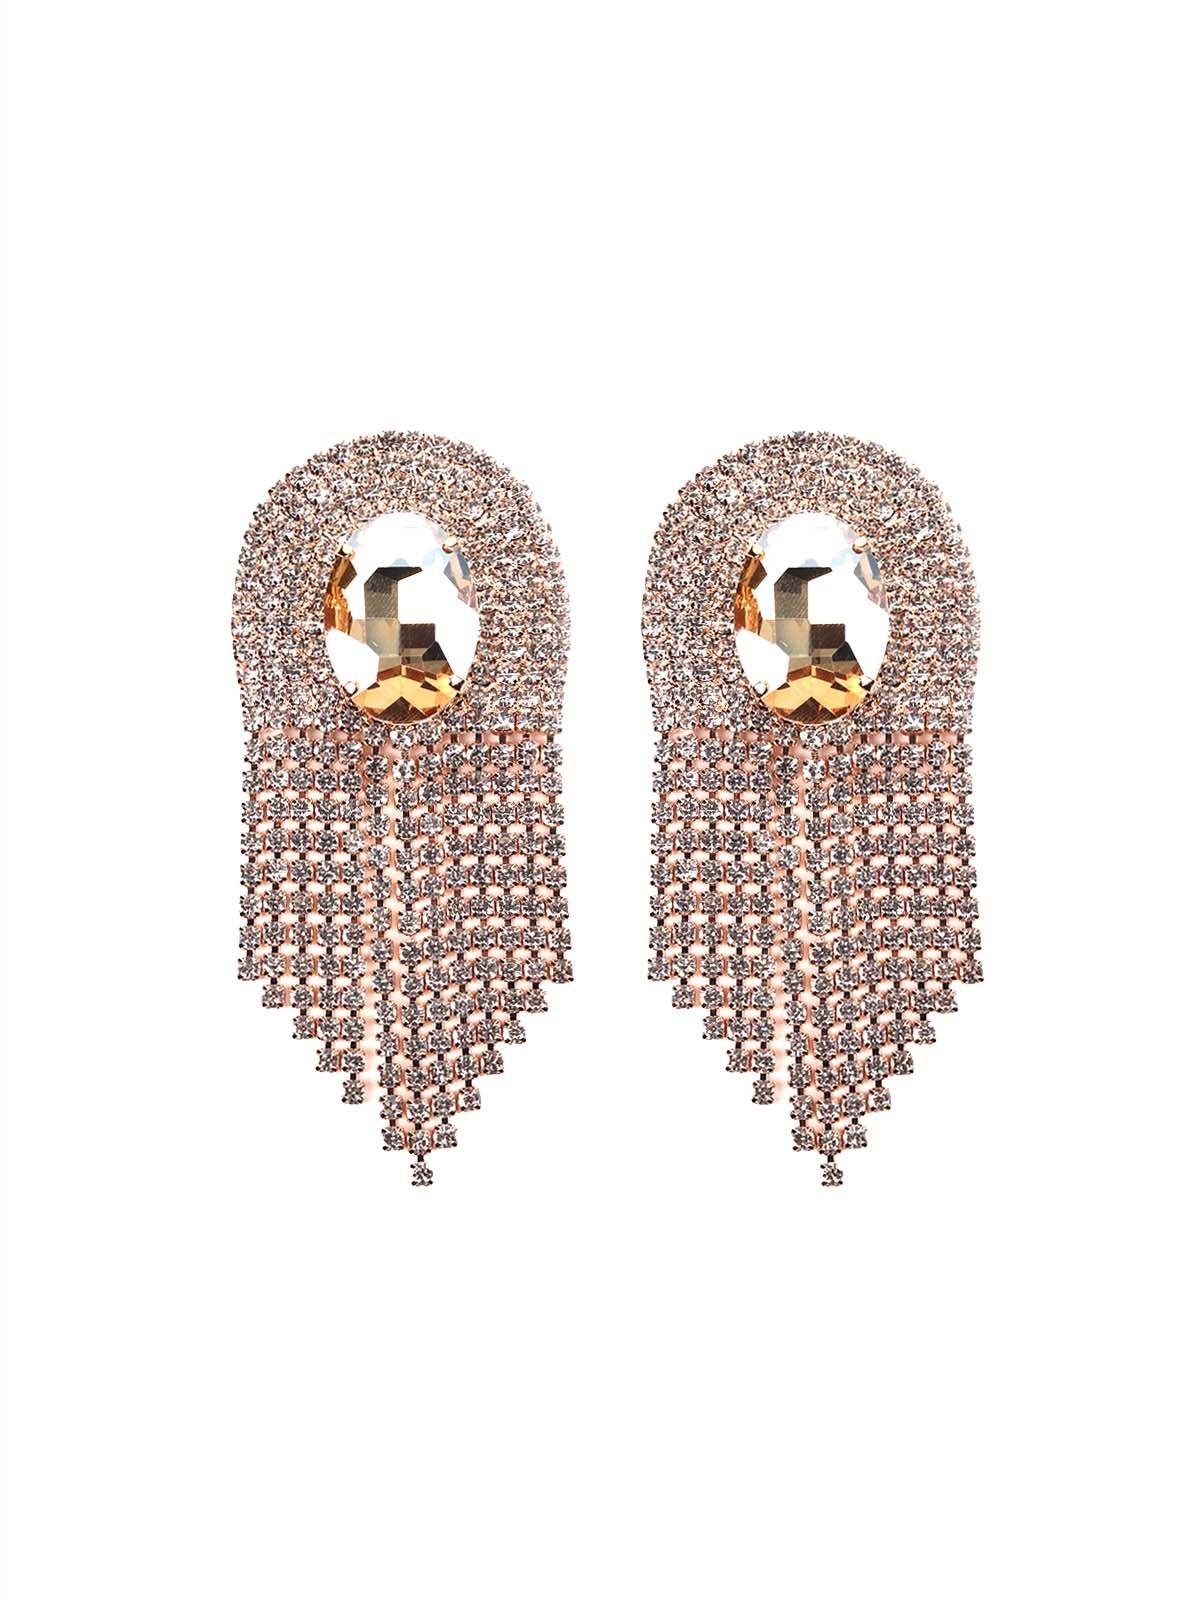 Crystal-Embellished Gold-Tone Overlapping Earring - Odette